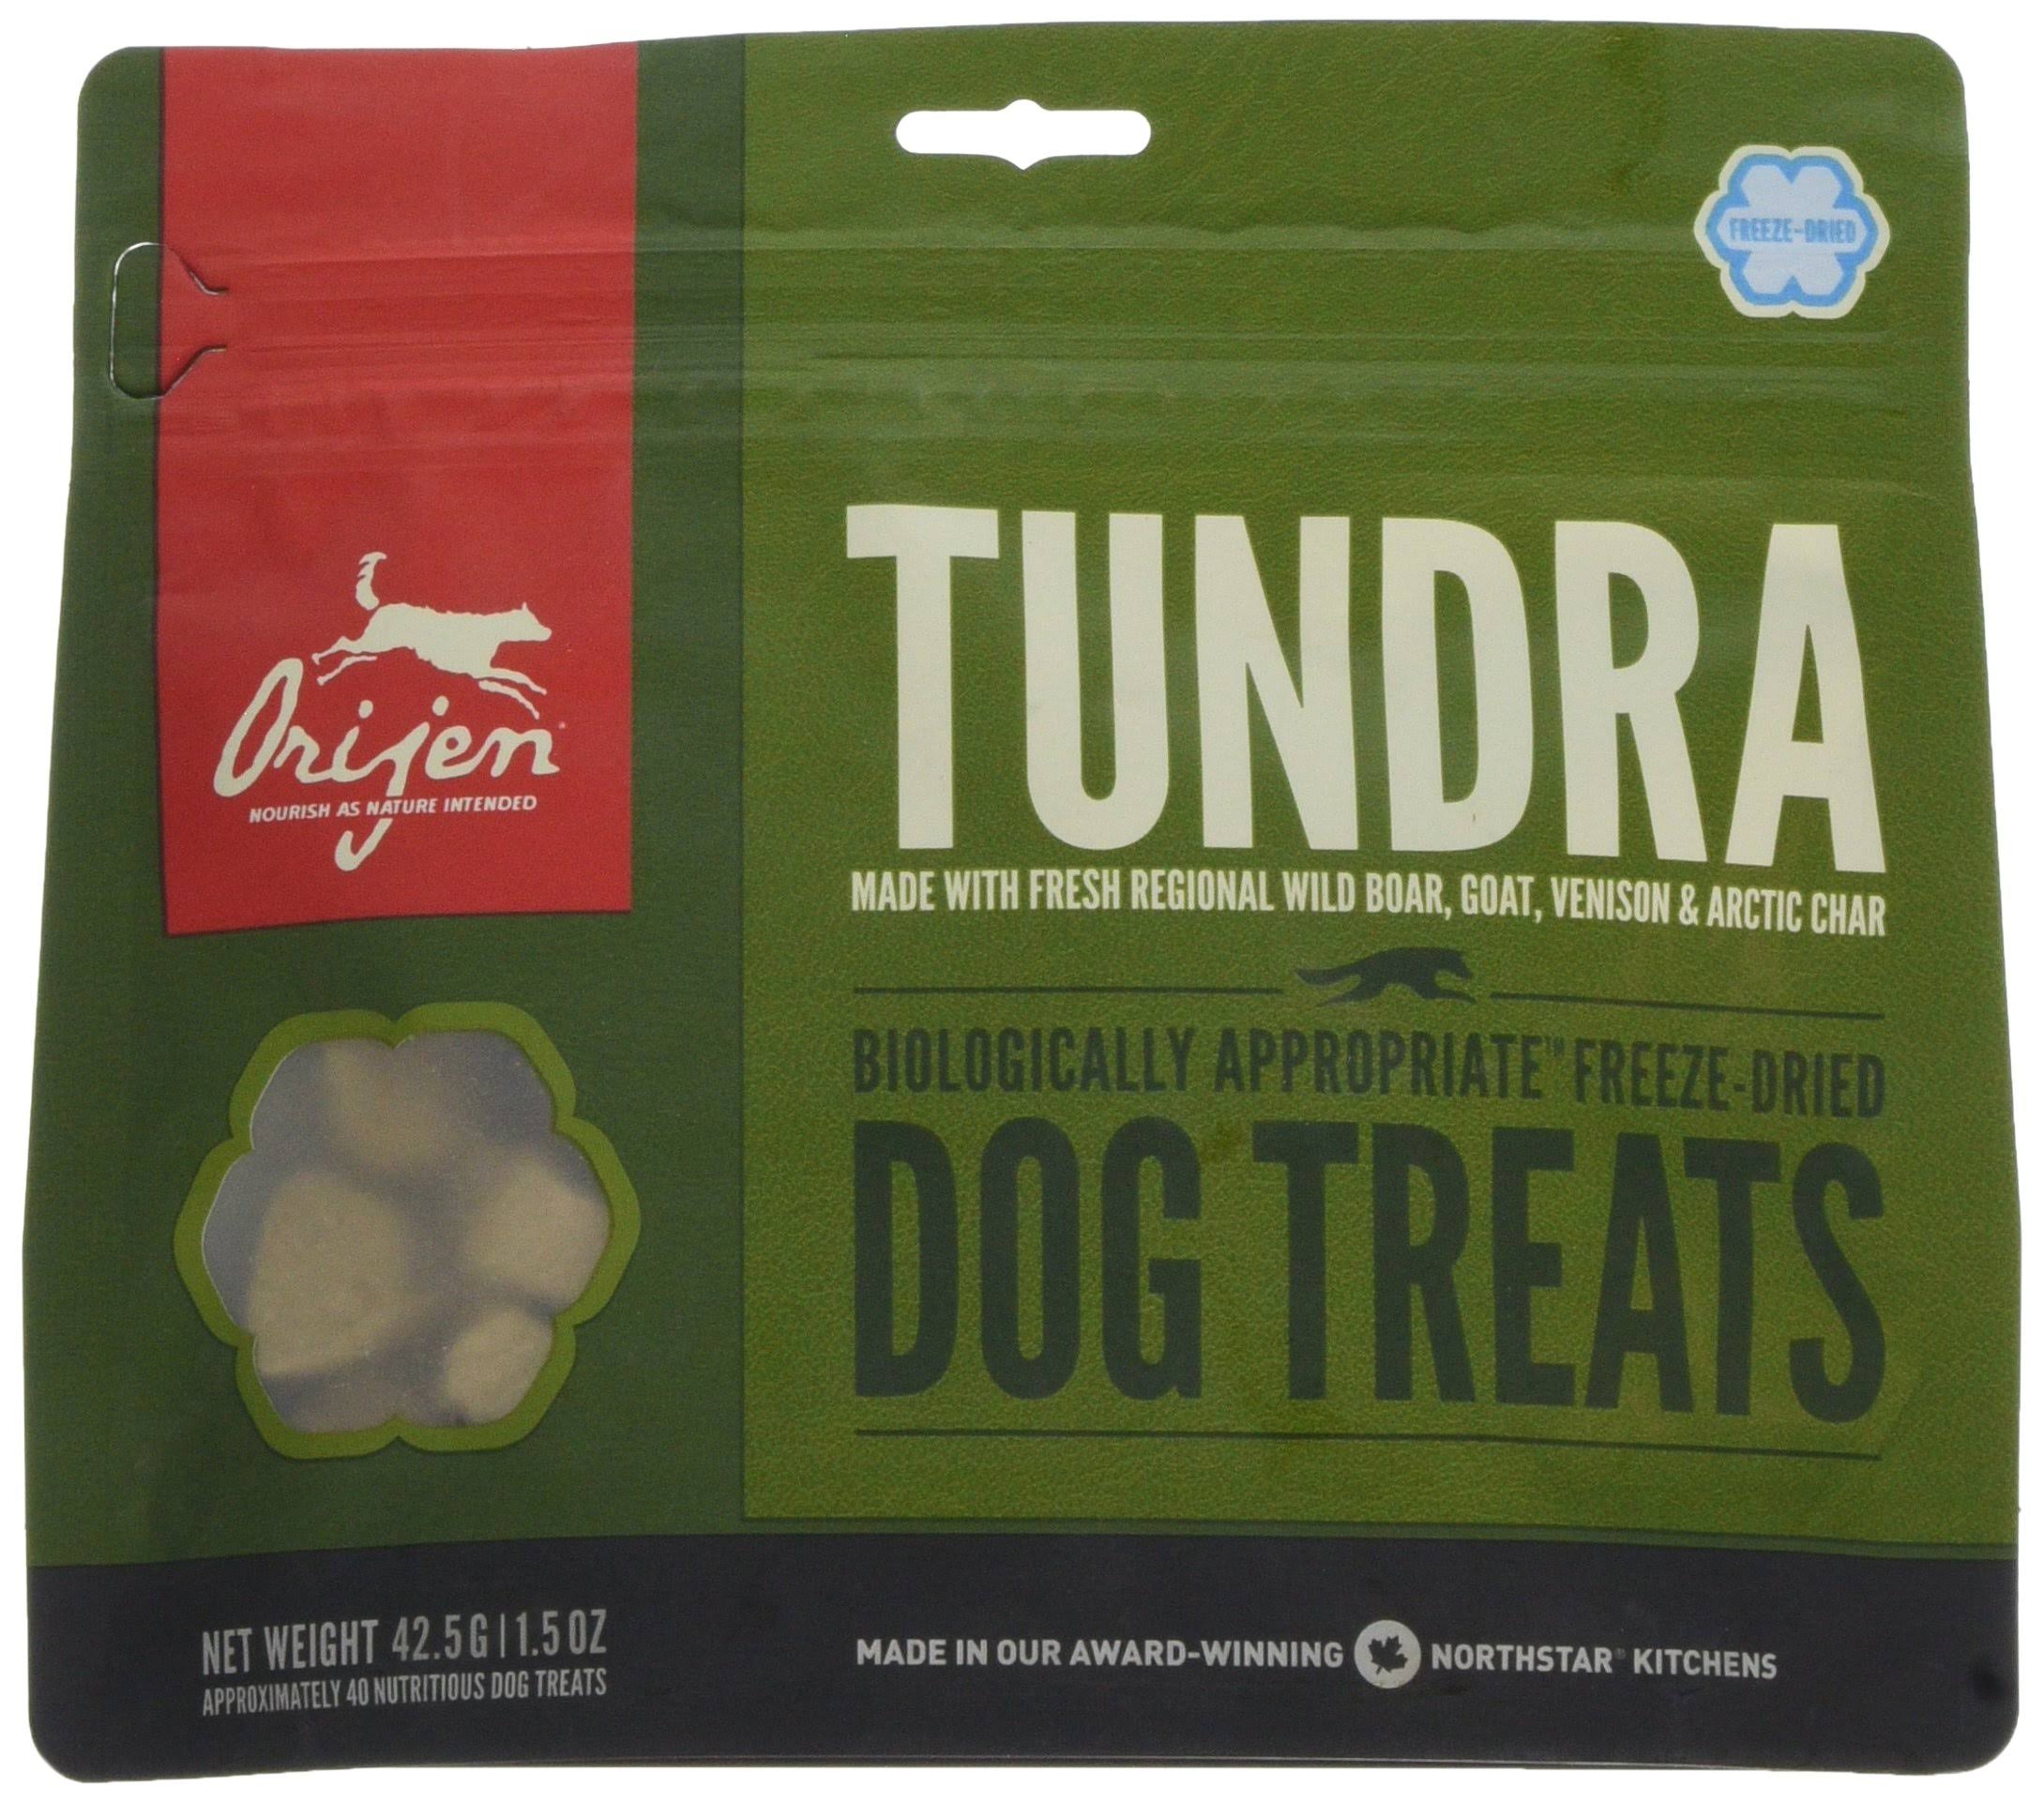 Orijen Tundra Dog Treats - 42.5g